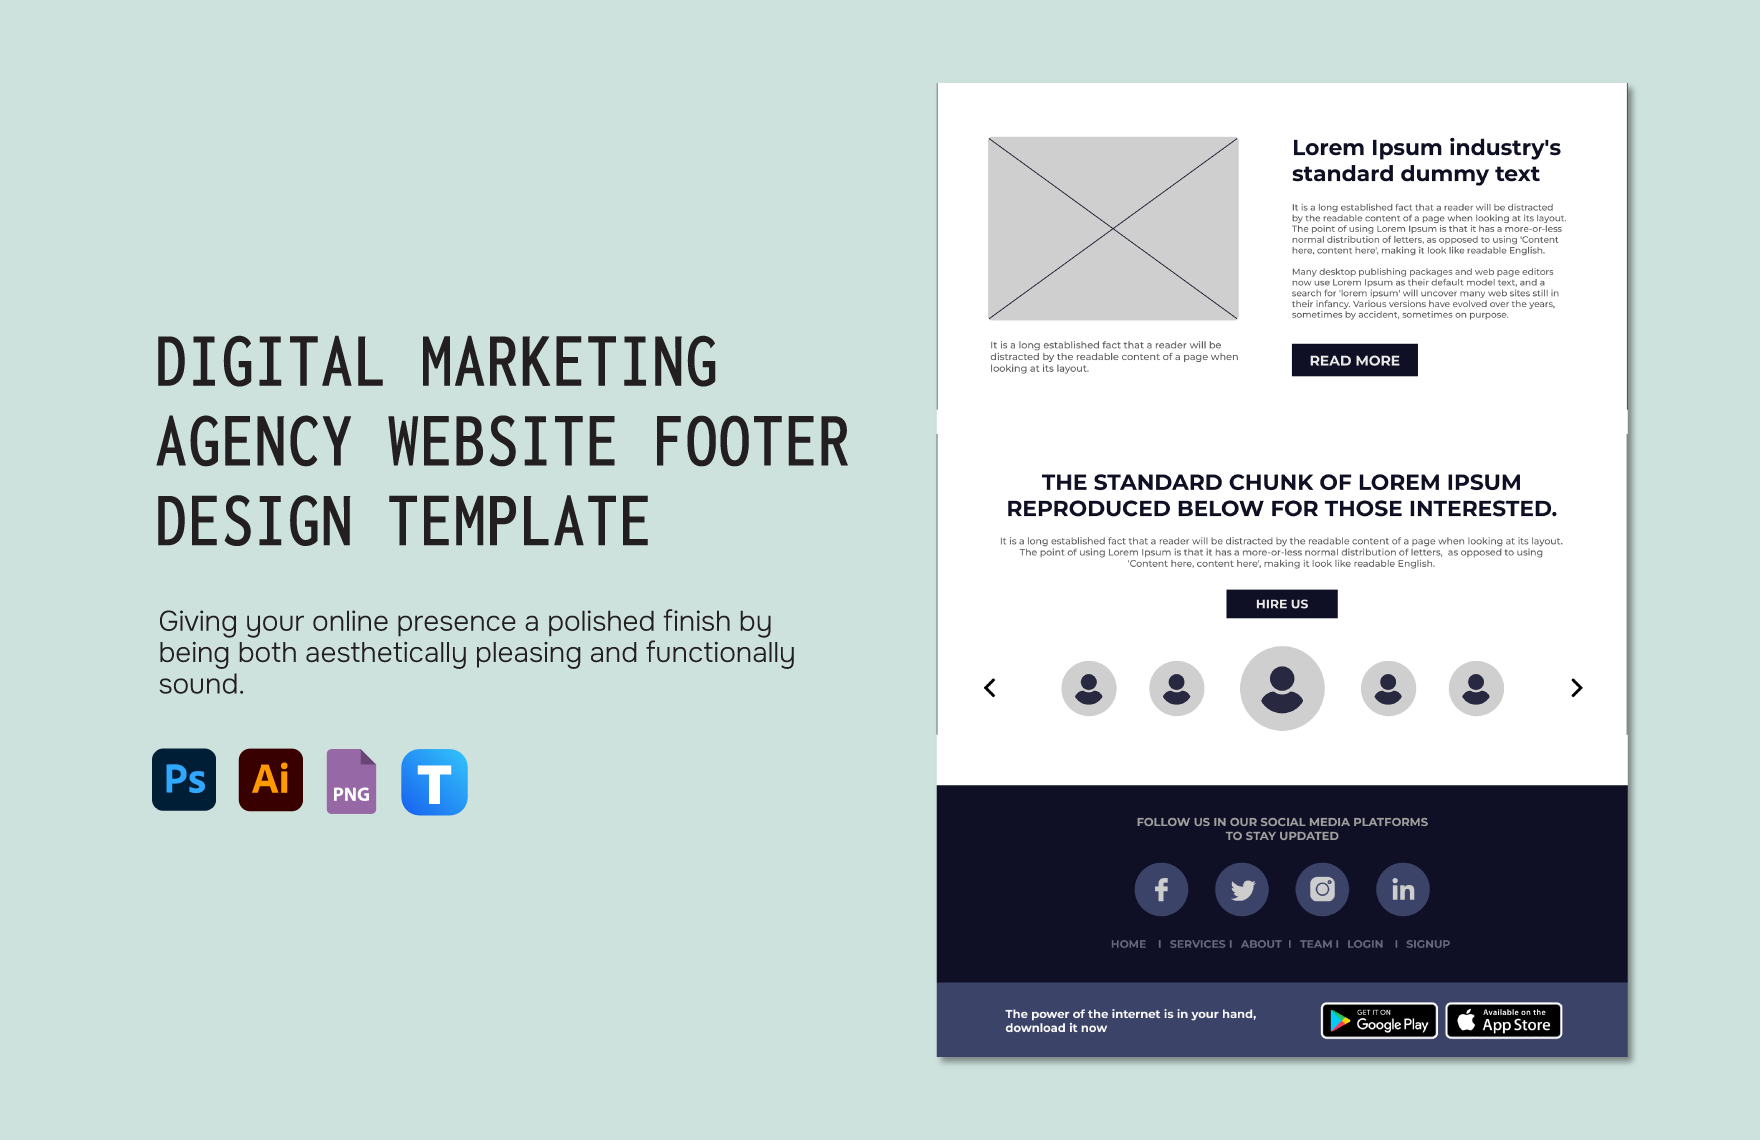 Digital Marketing Agency Website Footer Design Template